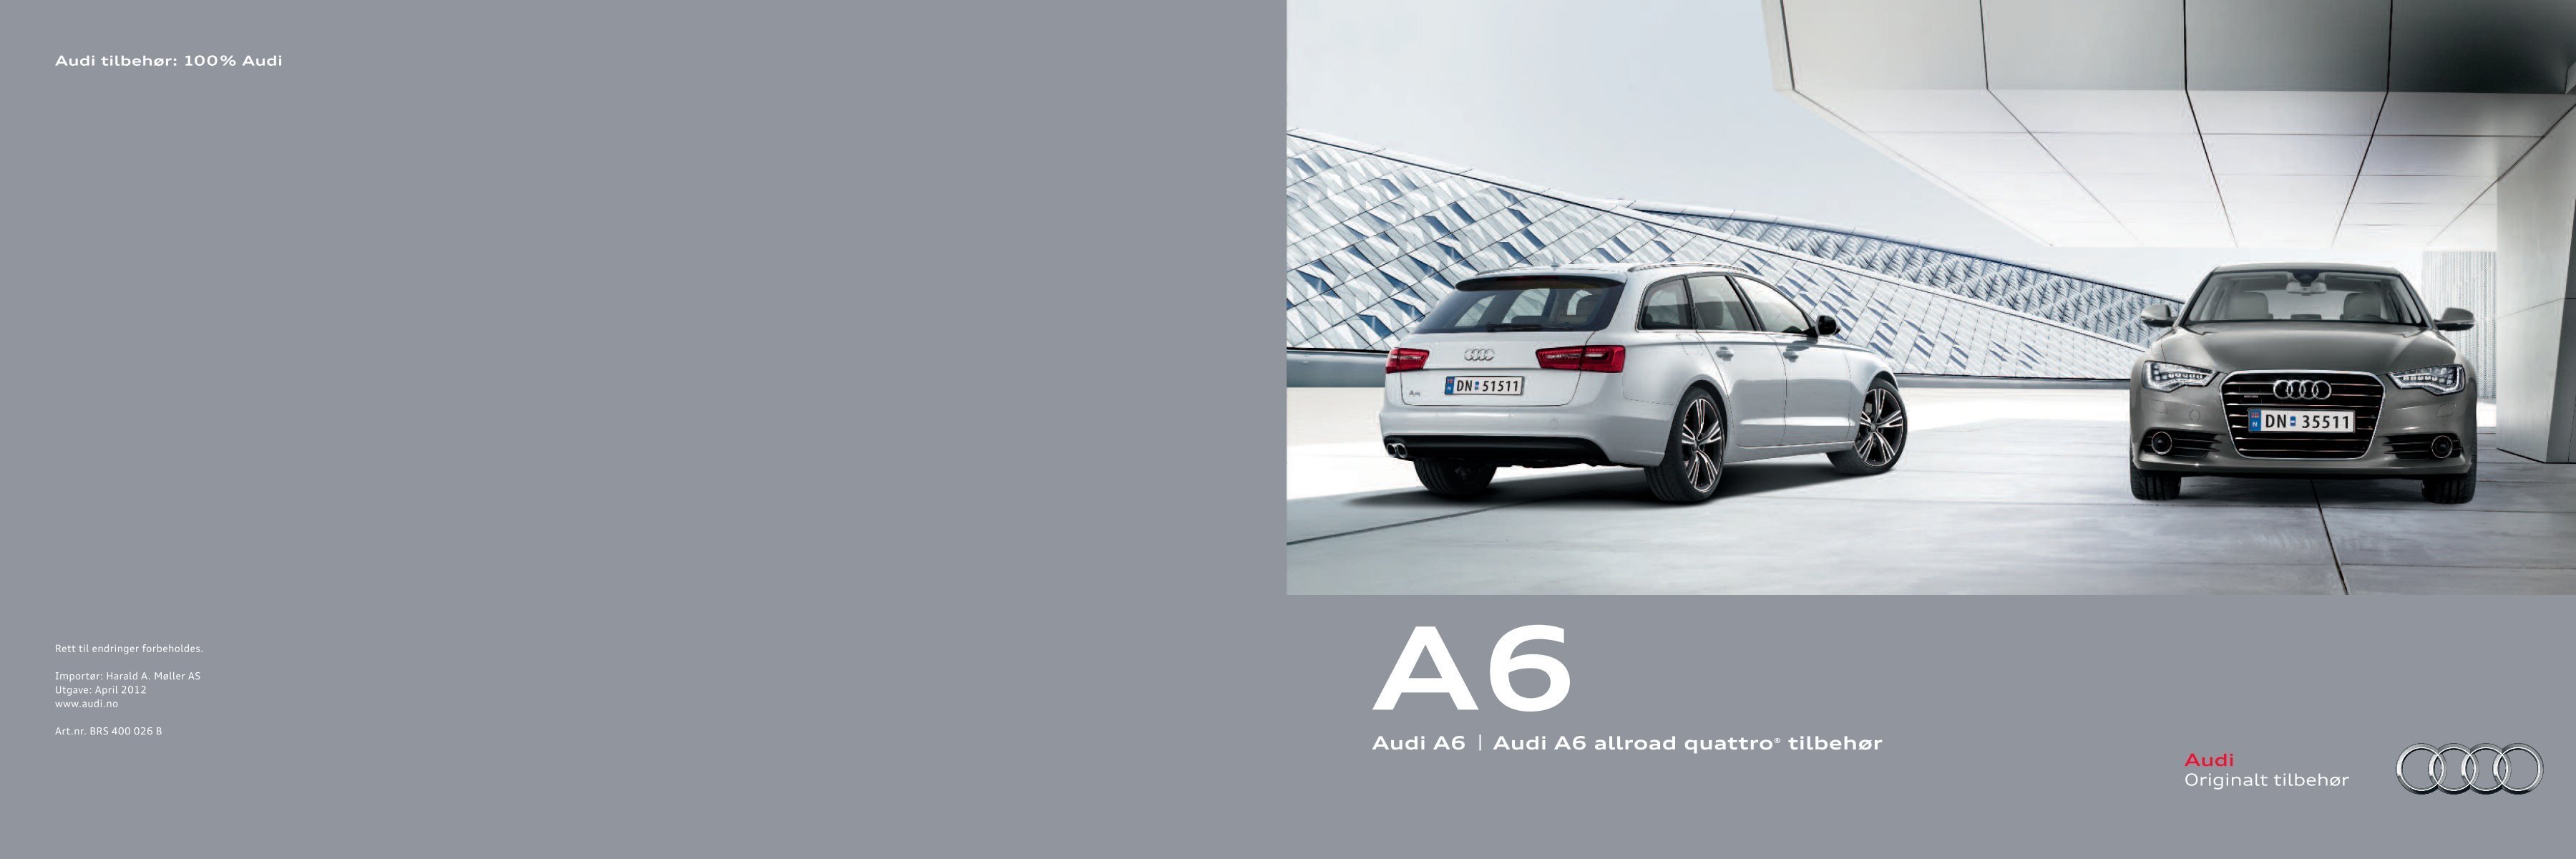 TilbehÃ¸rsbrosjyre Audi A6 og A6 allroad quattro